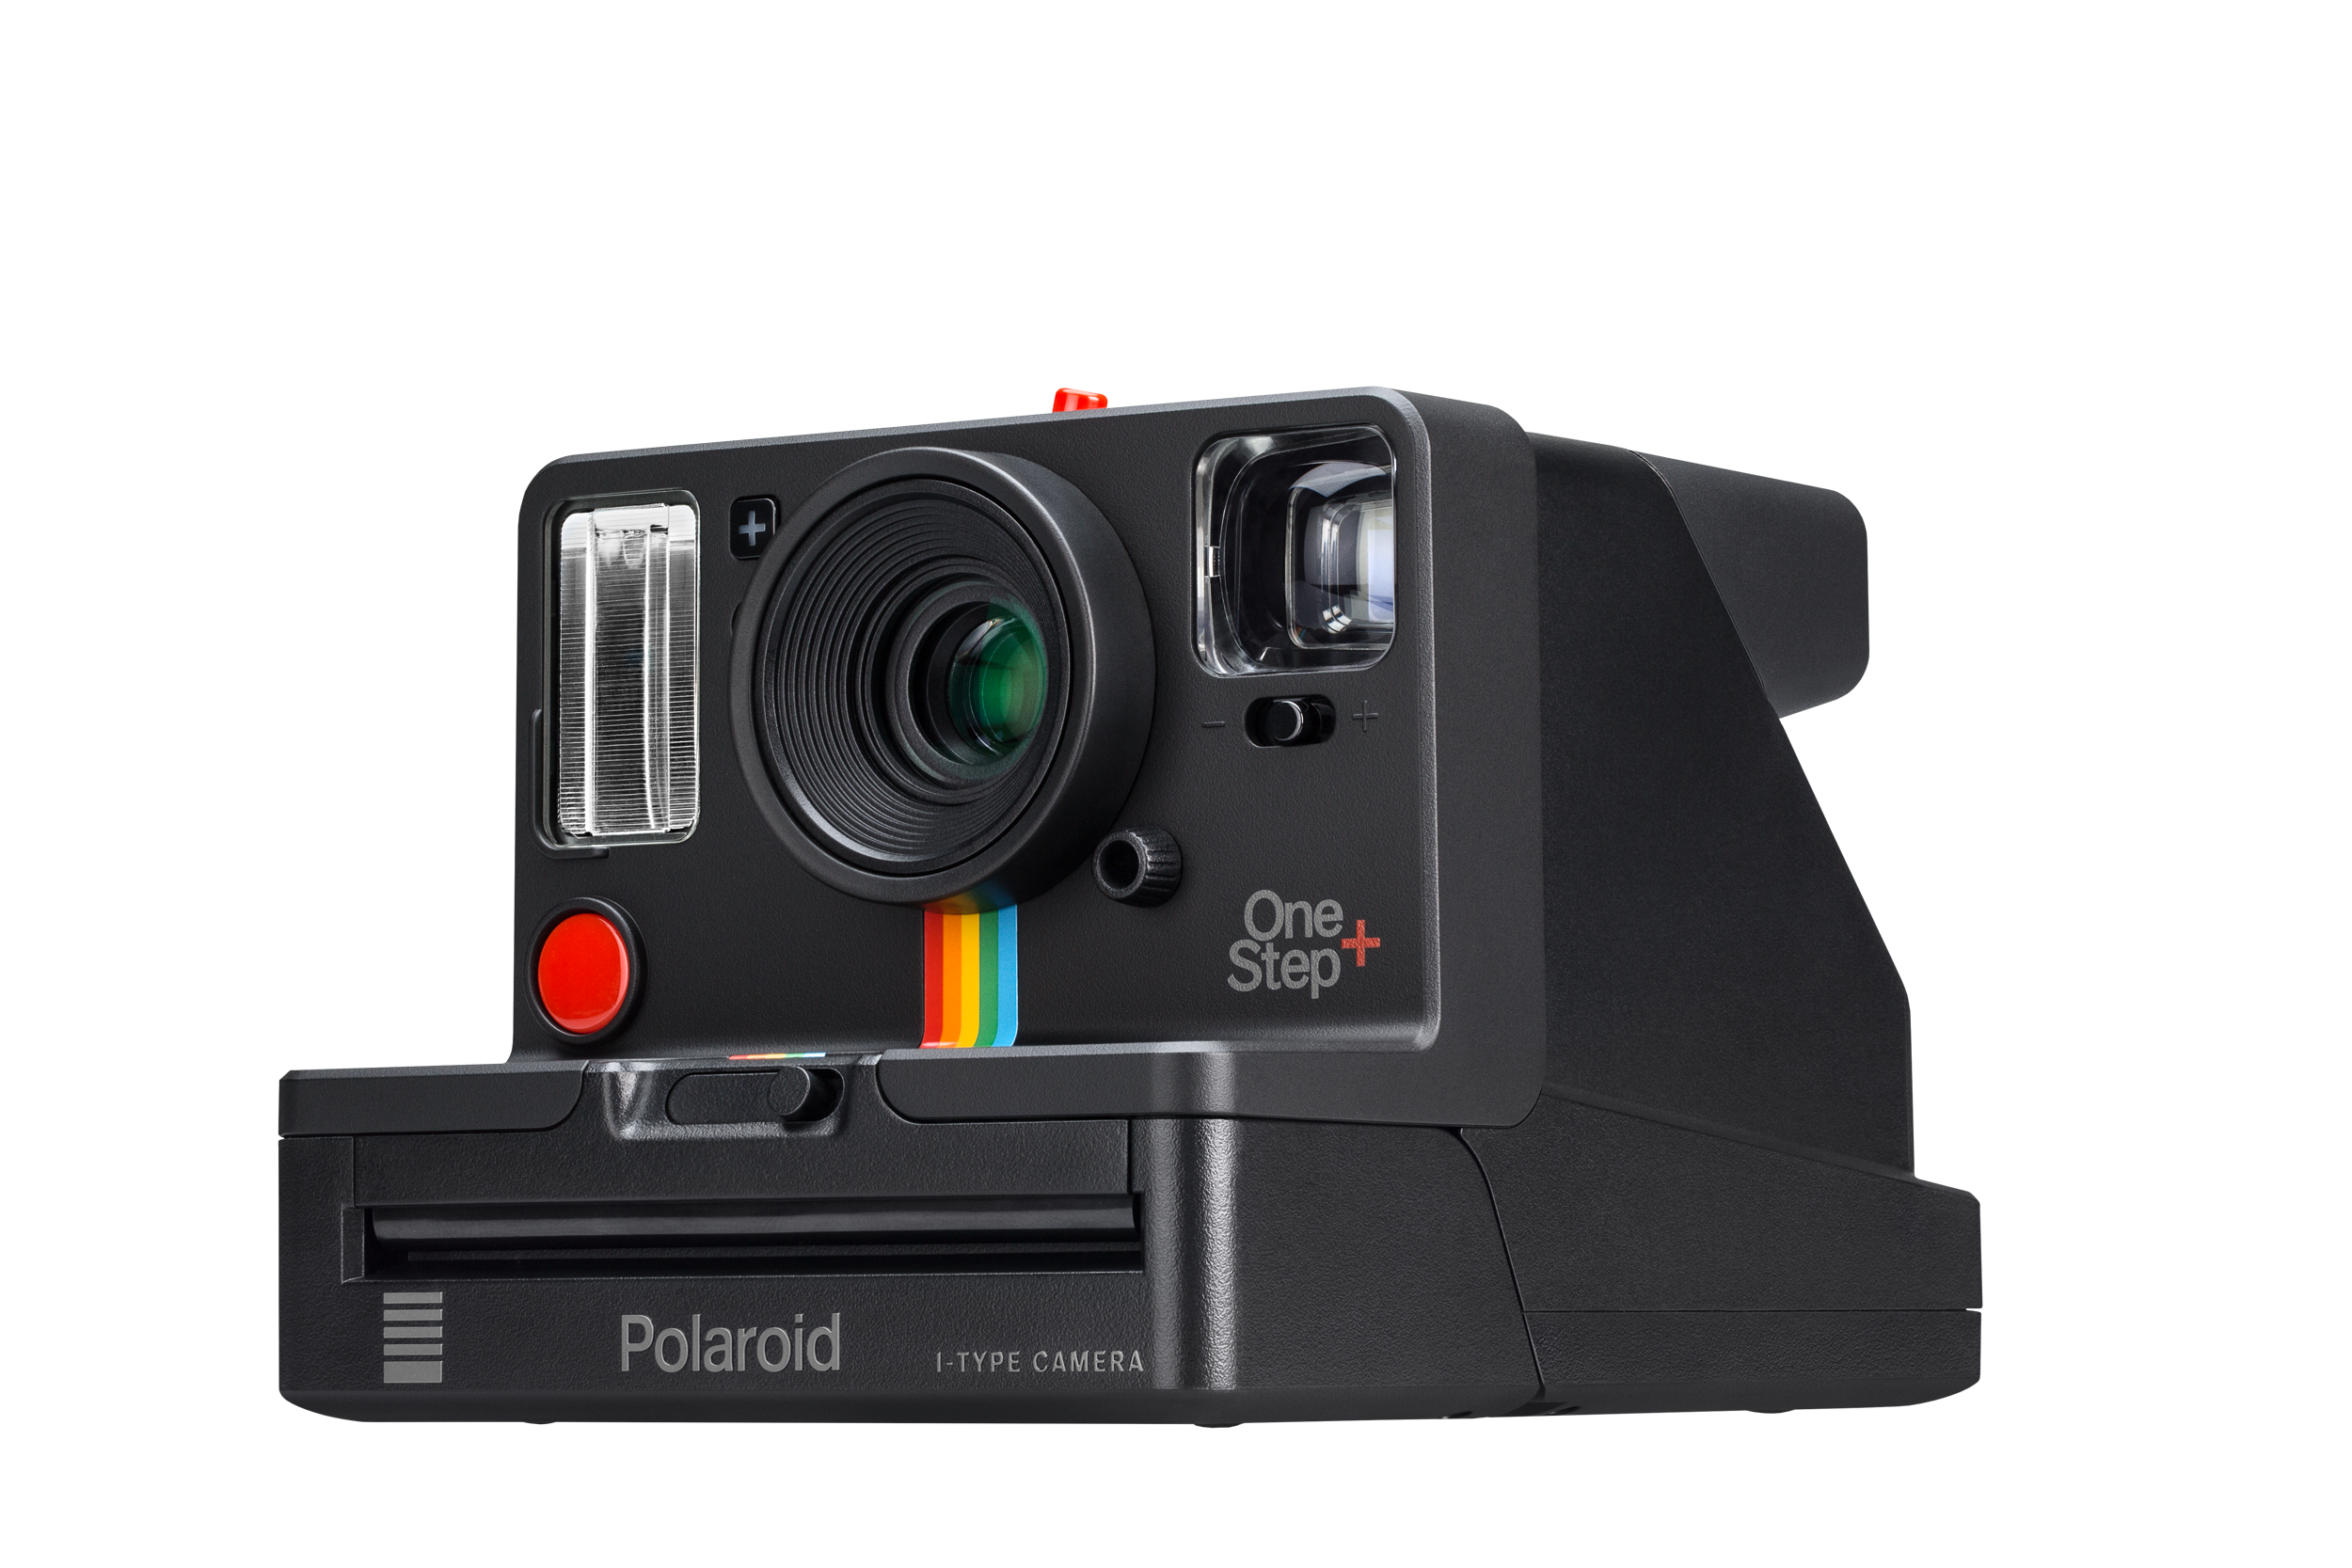 Best camera under £200: Polaroid OneStep+